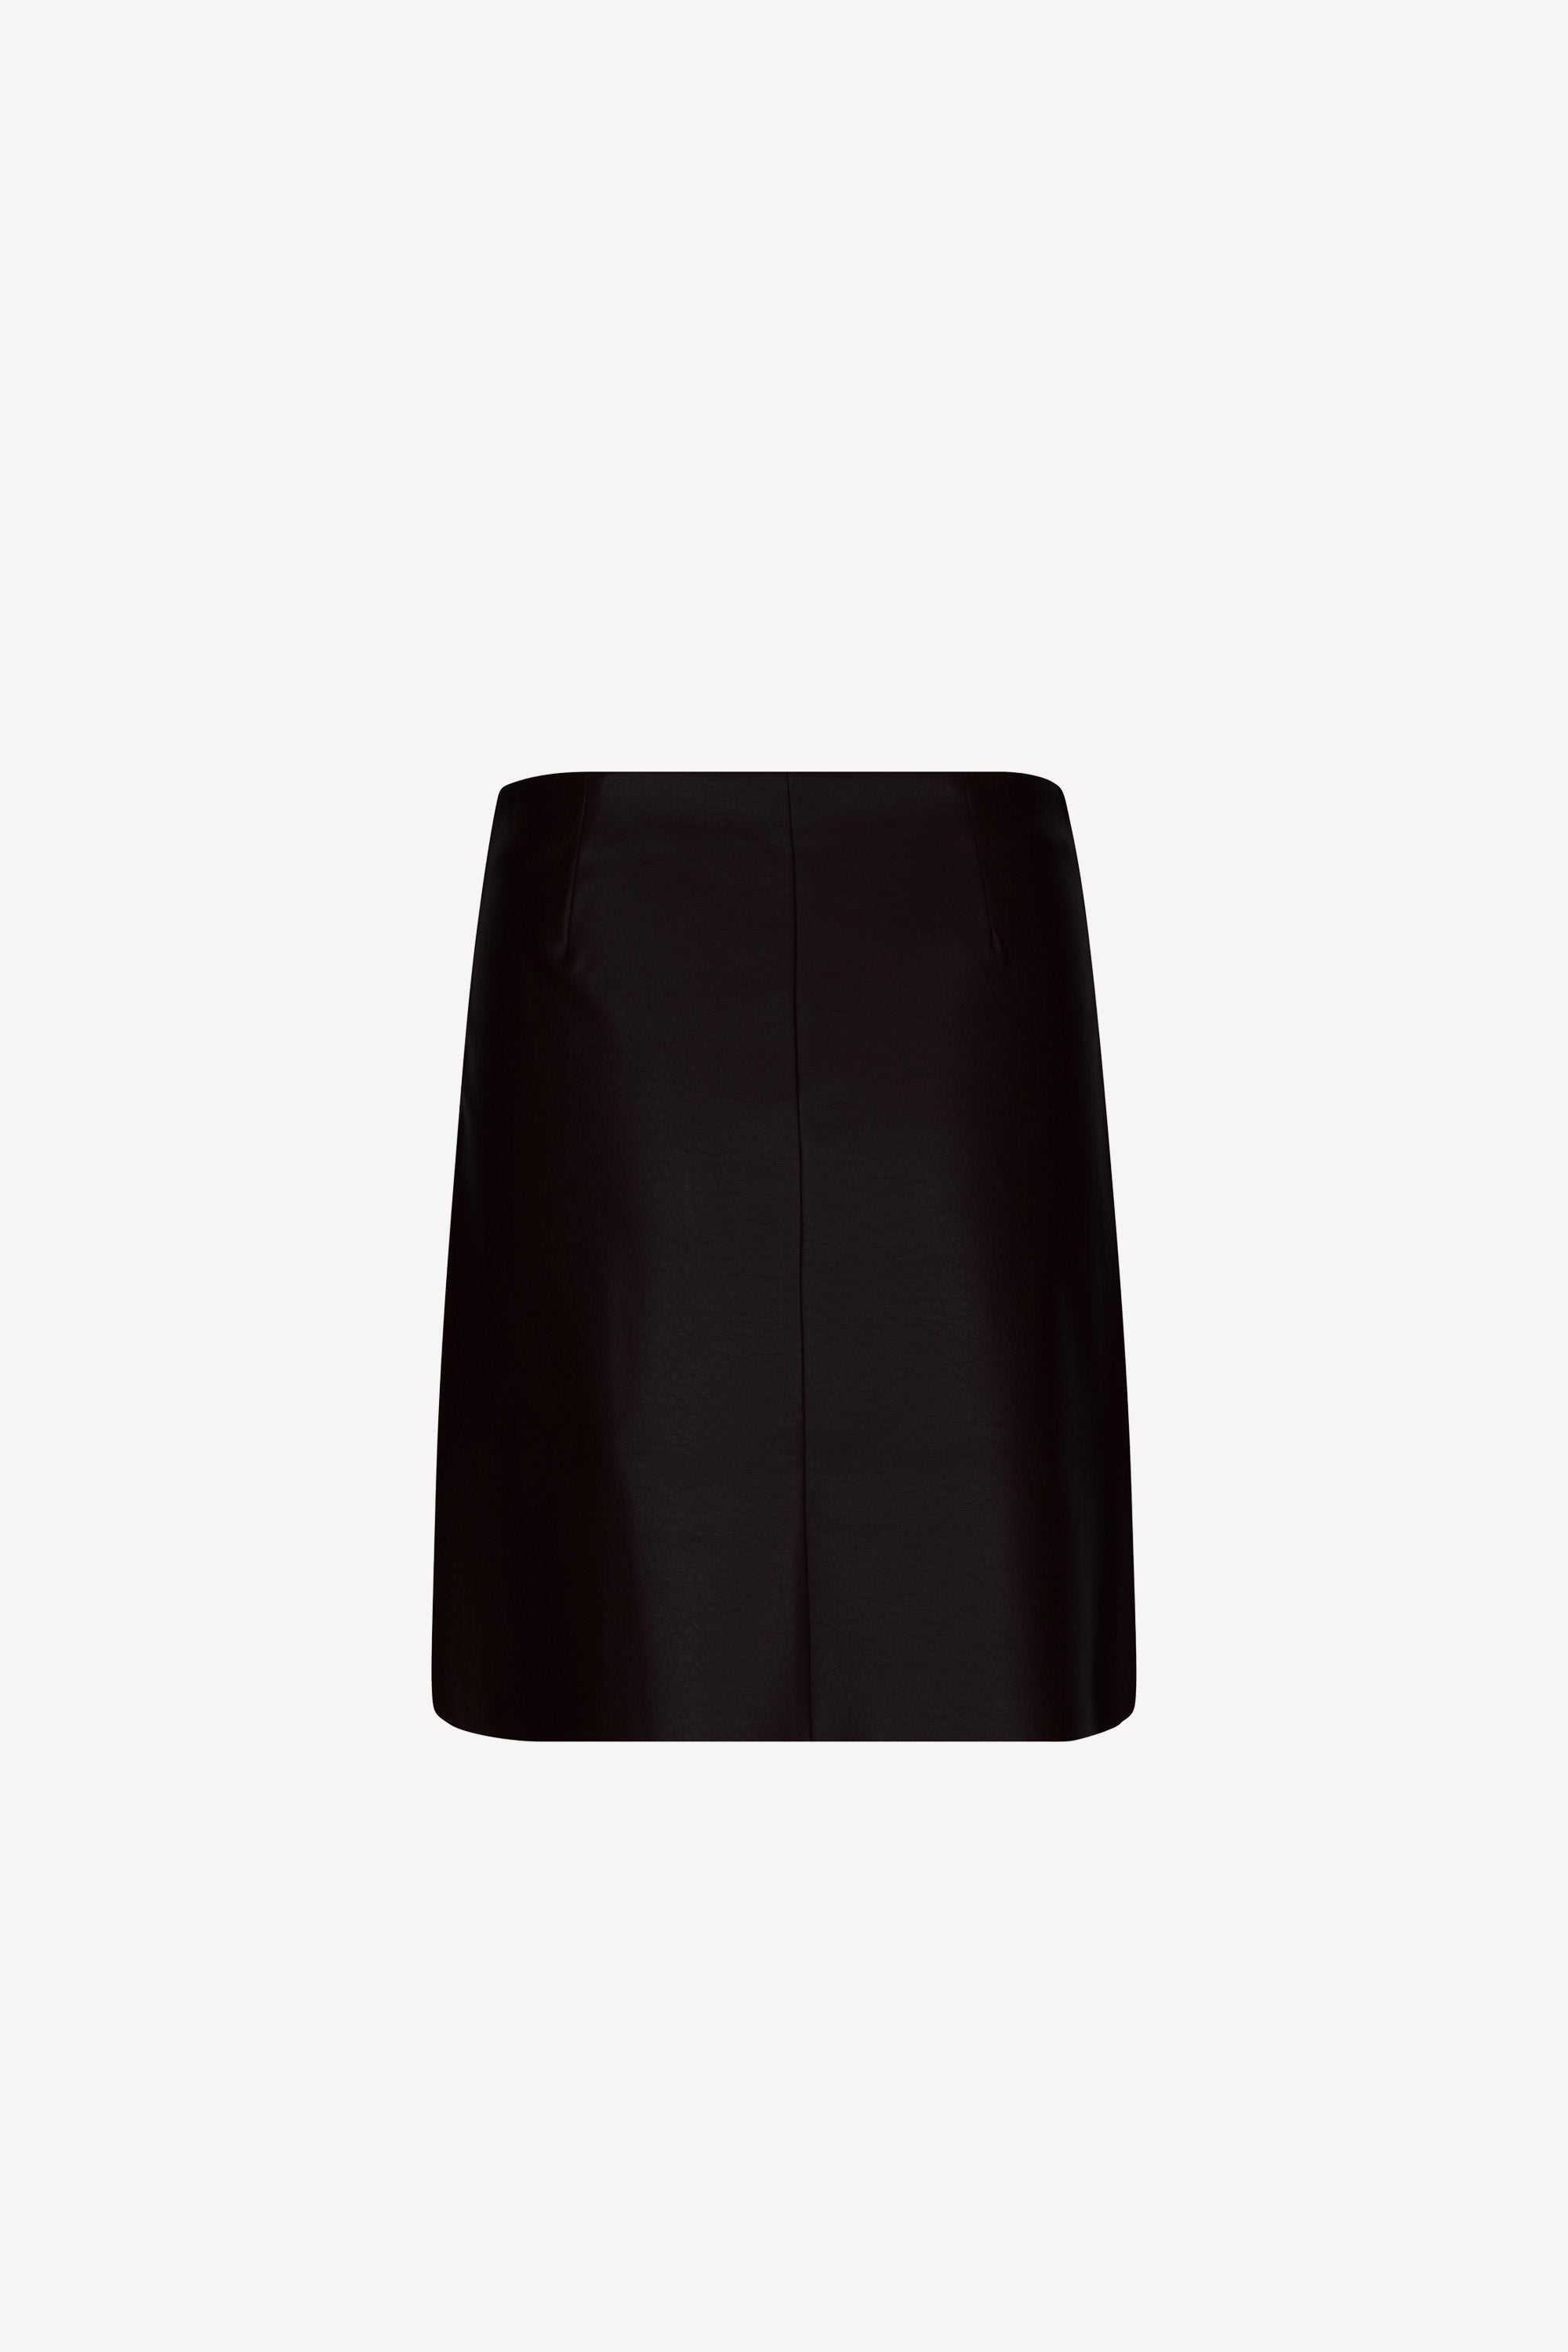 Huxley Skirt Black